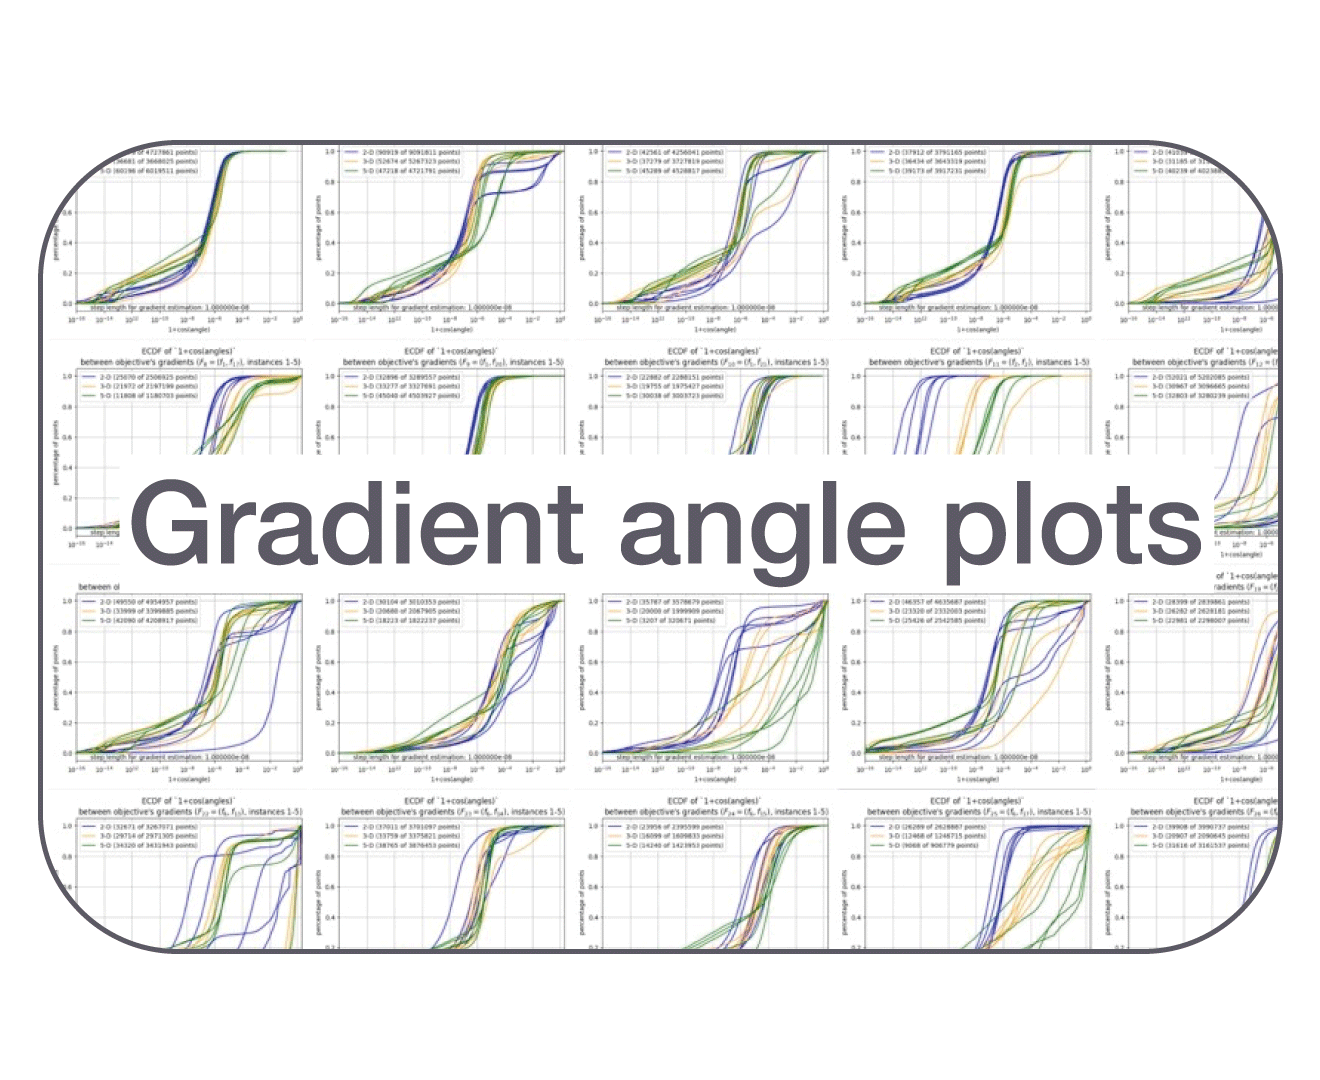 Gradient angle plots